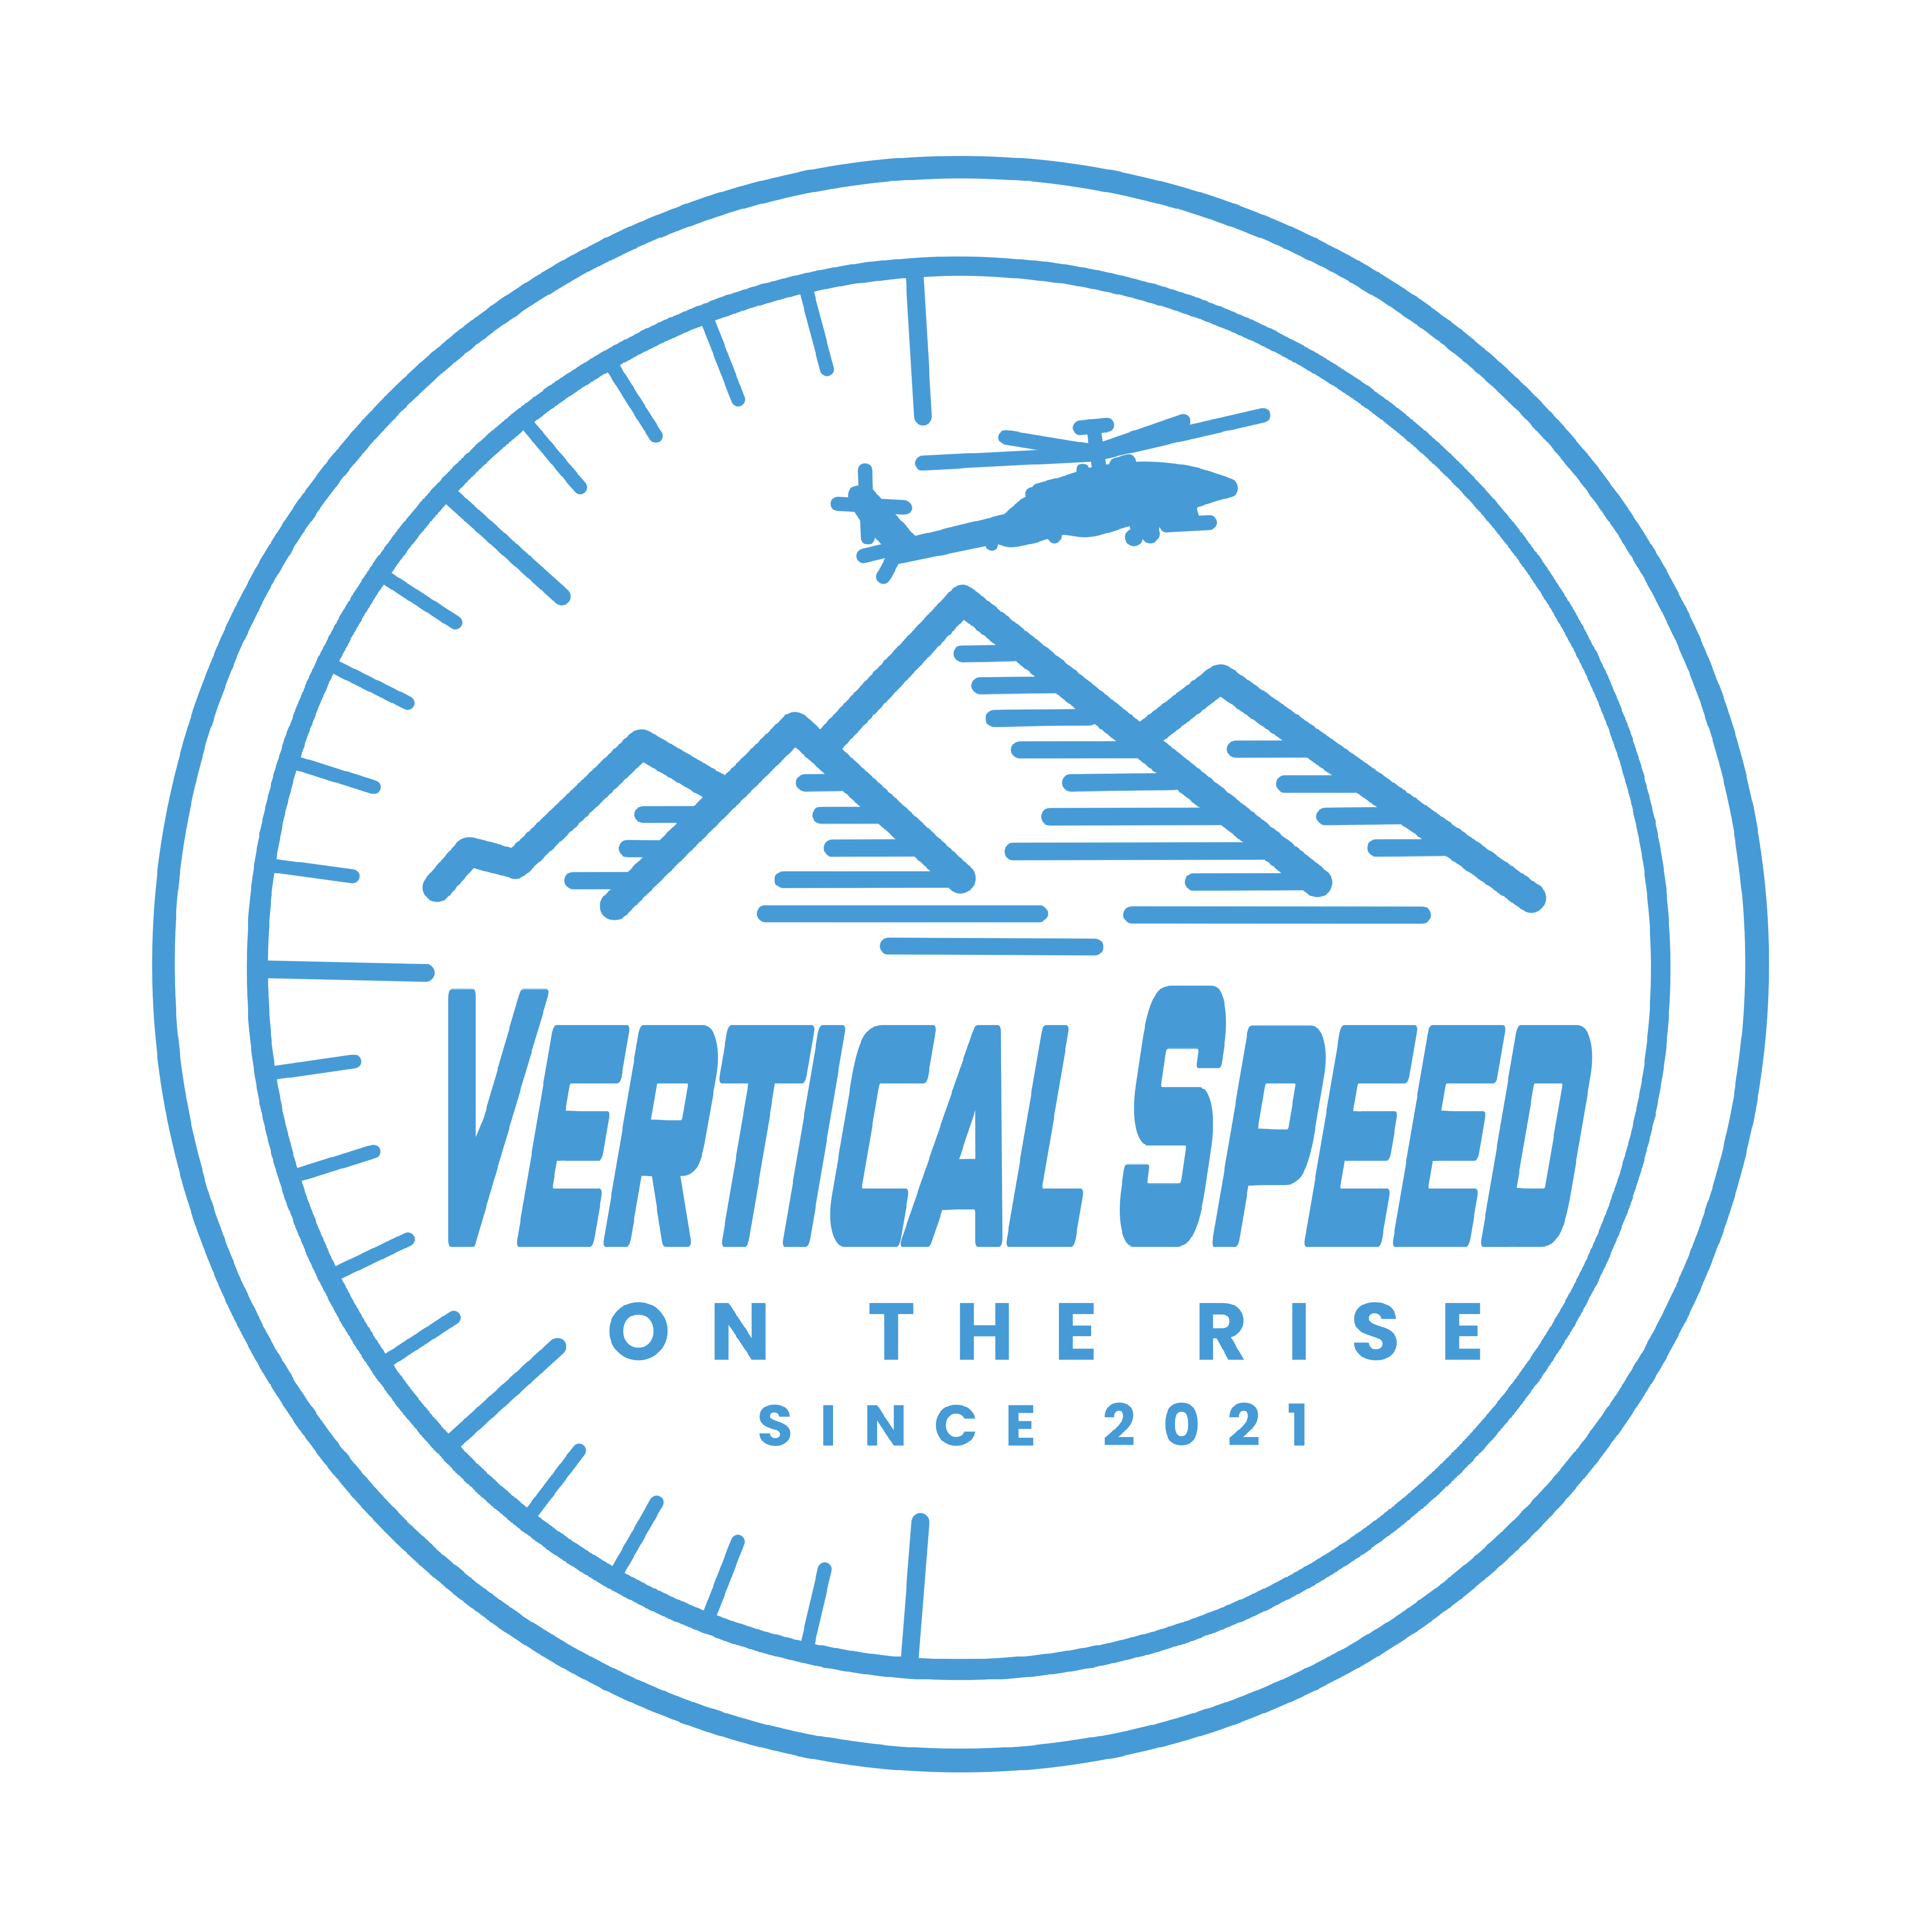 www.verticalspeed.com